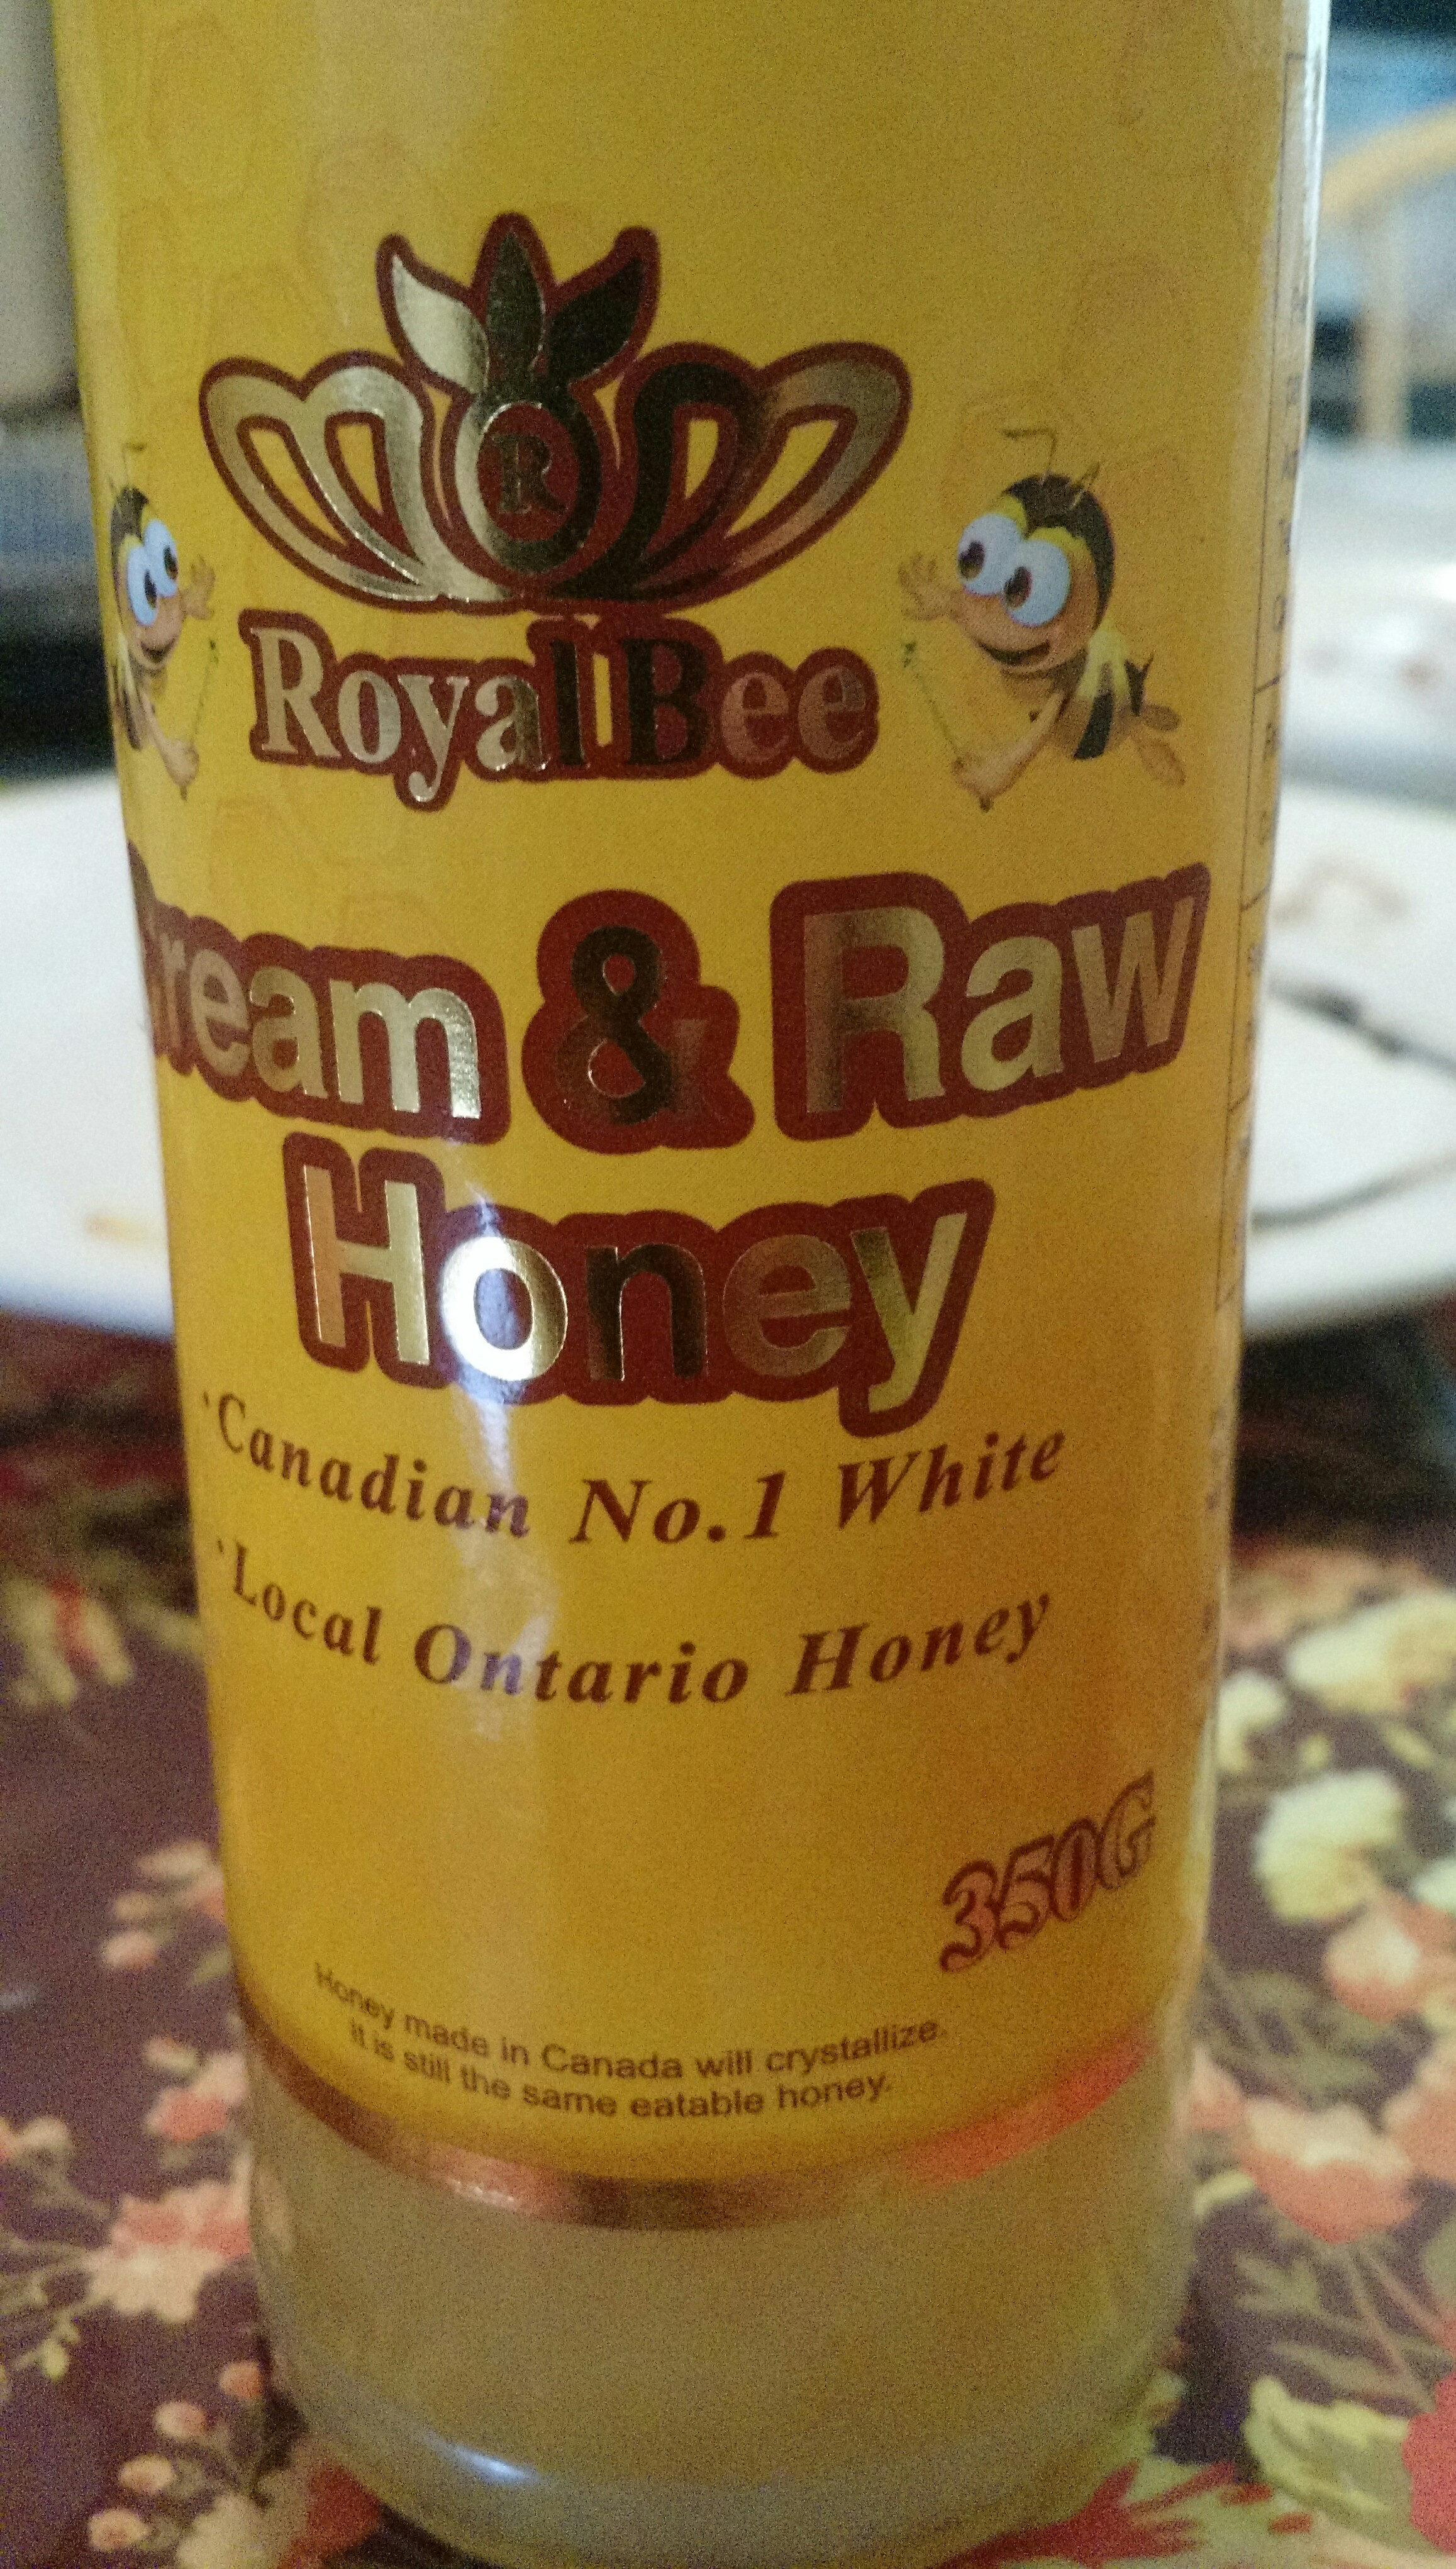 Cream & Raw Honey - Product